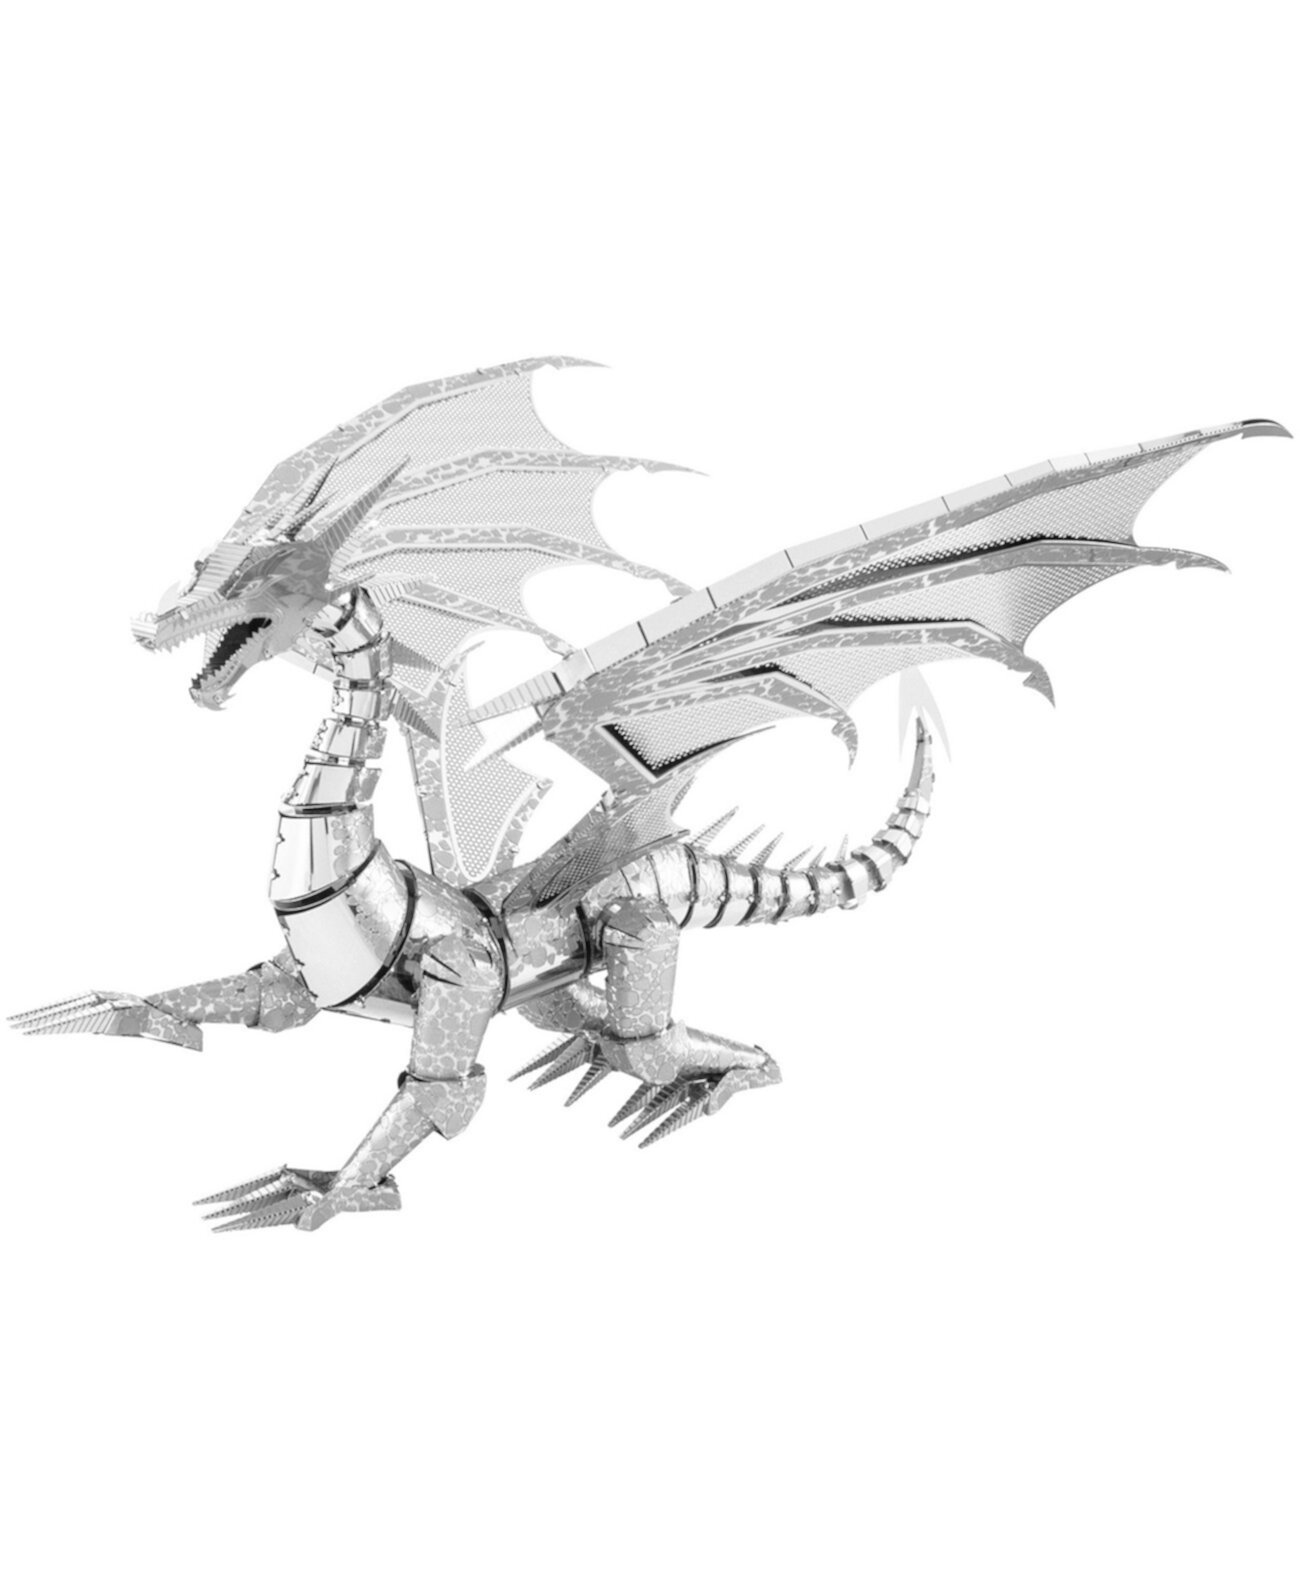 Silver Dragon metallearth конструктор